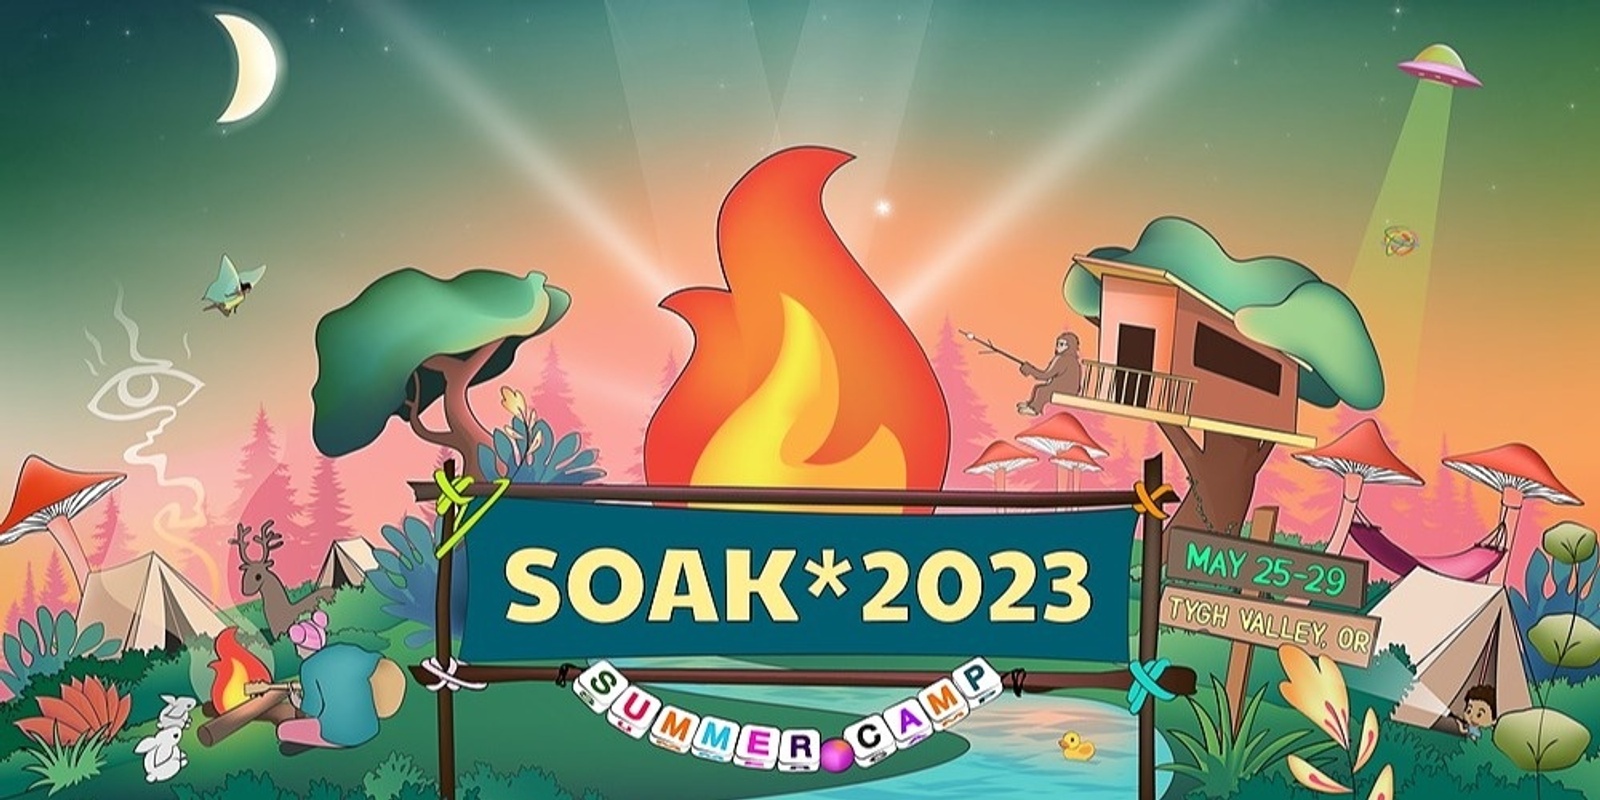 SOAK*2023: Summer Camp!